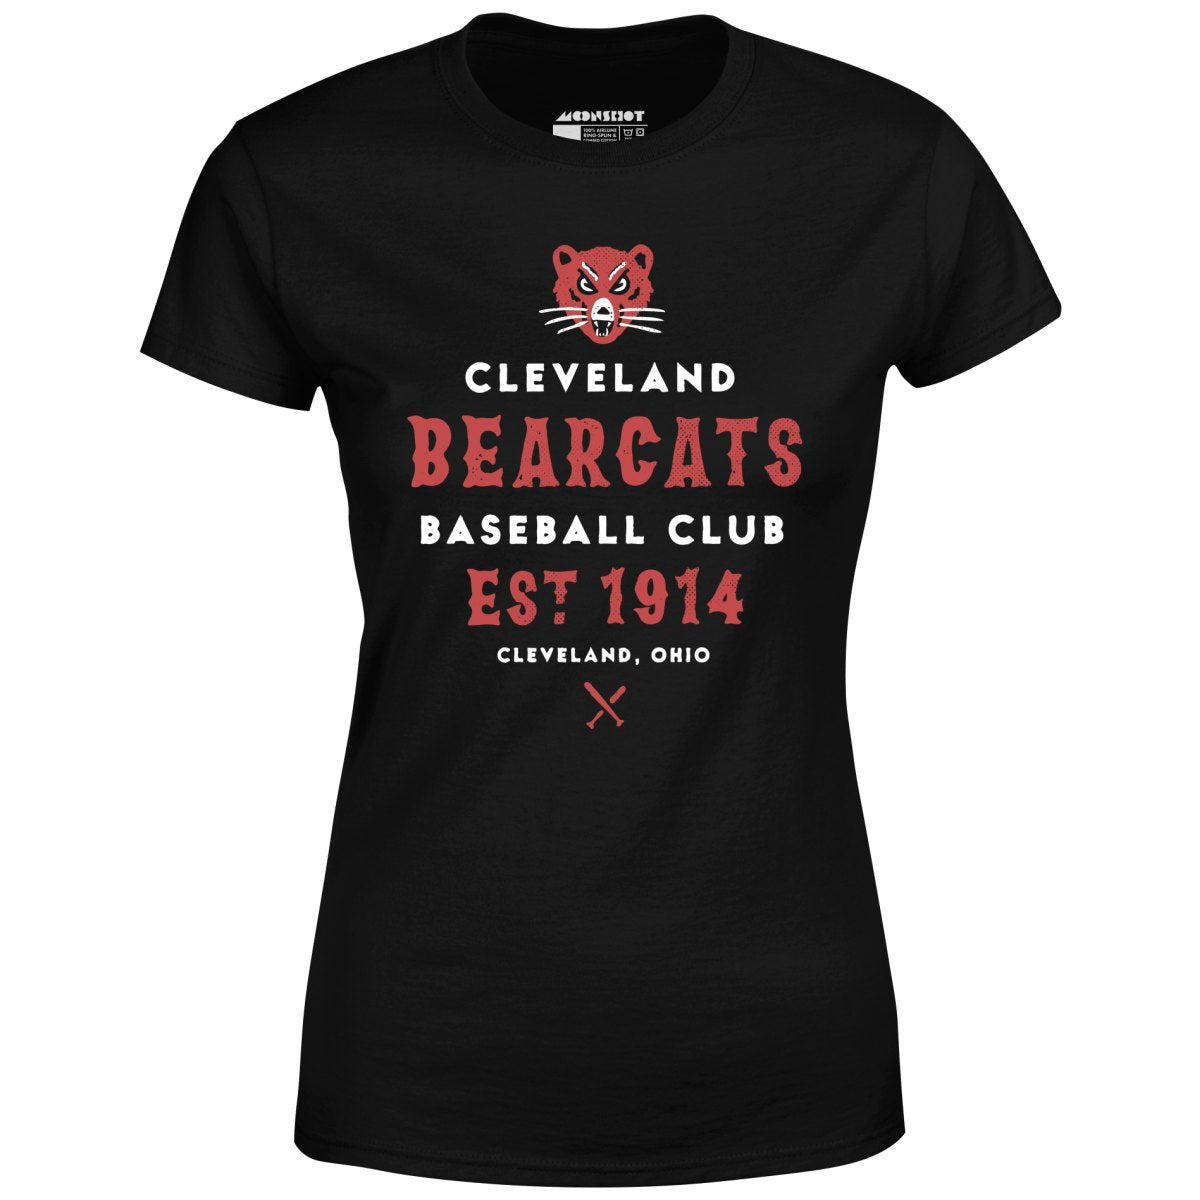 Cleveland Bearcats - Ohio - Vintage Defunct Baseball Teams - Women's T-Shirt